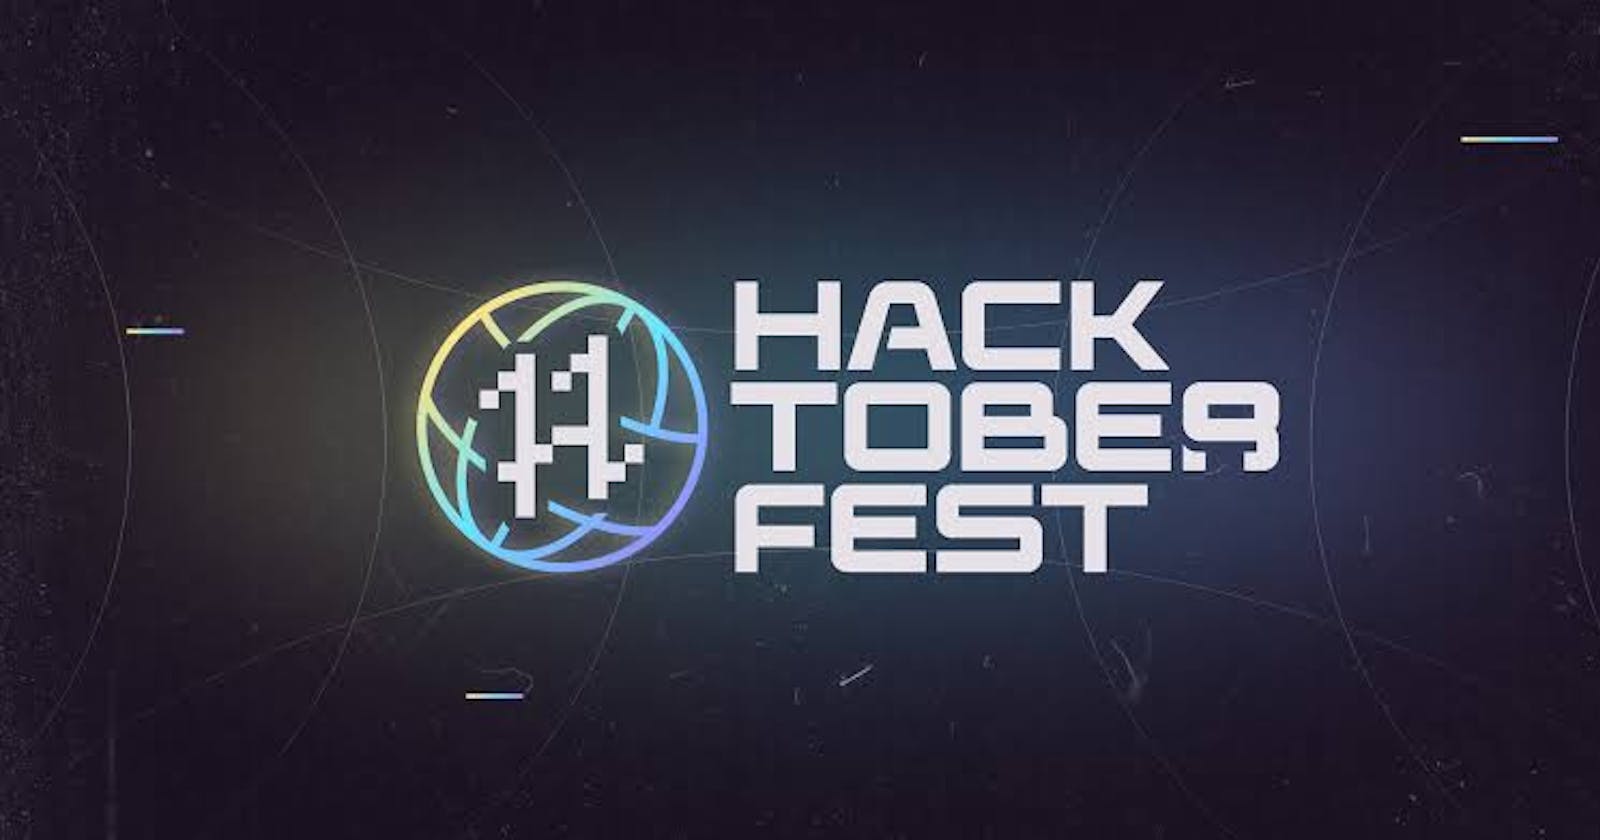 First Hacktoberfest experience 2022